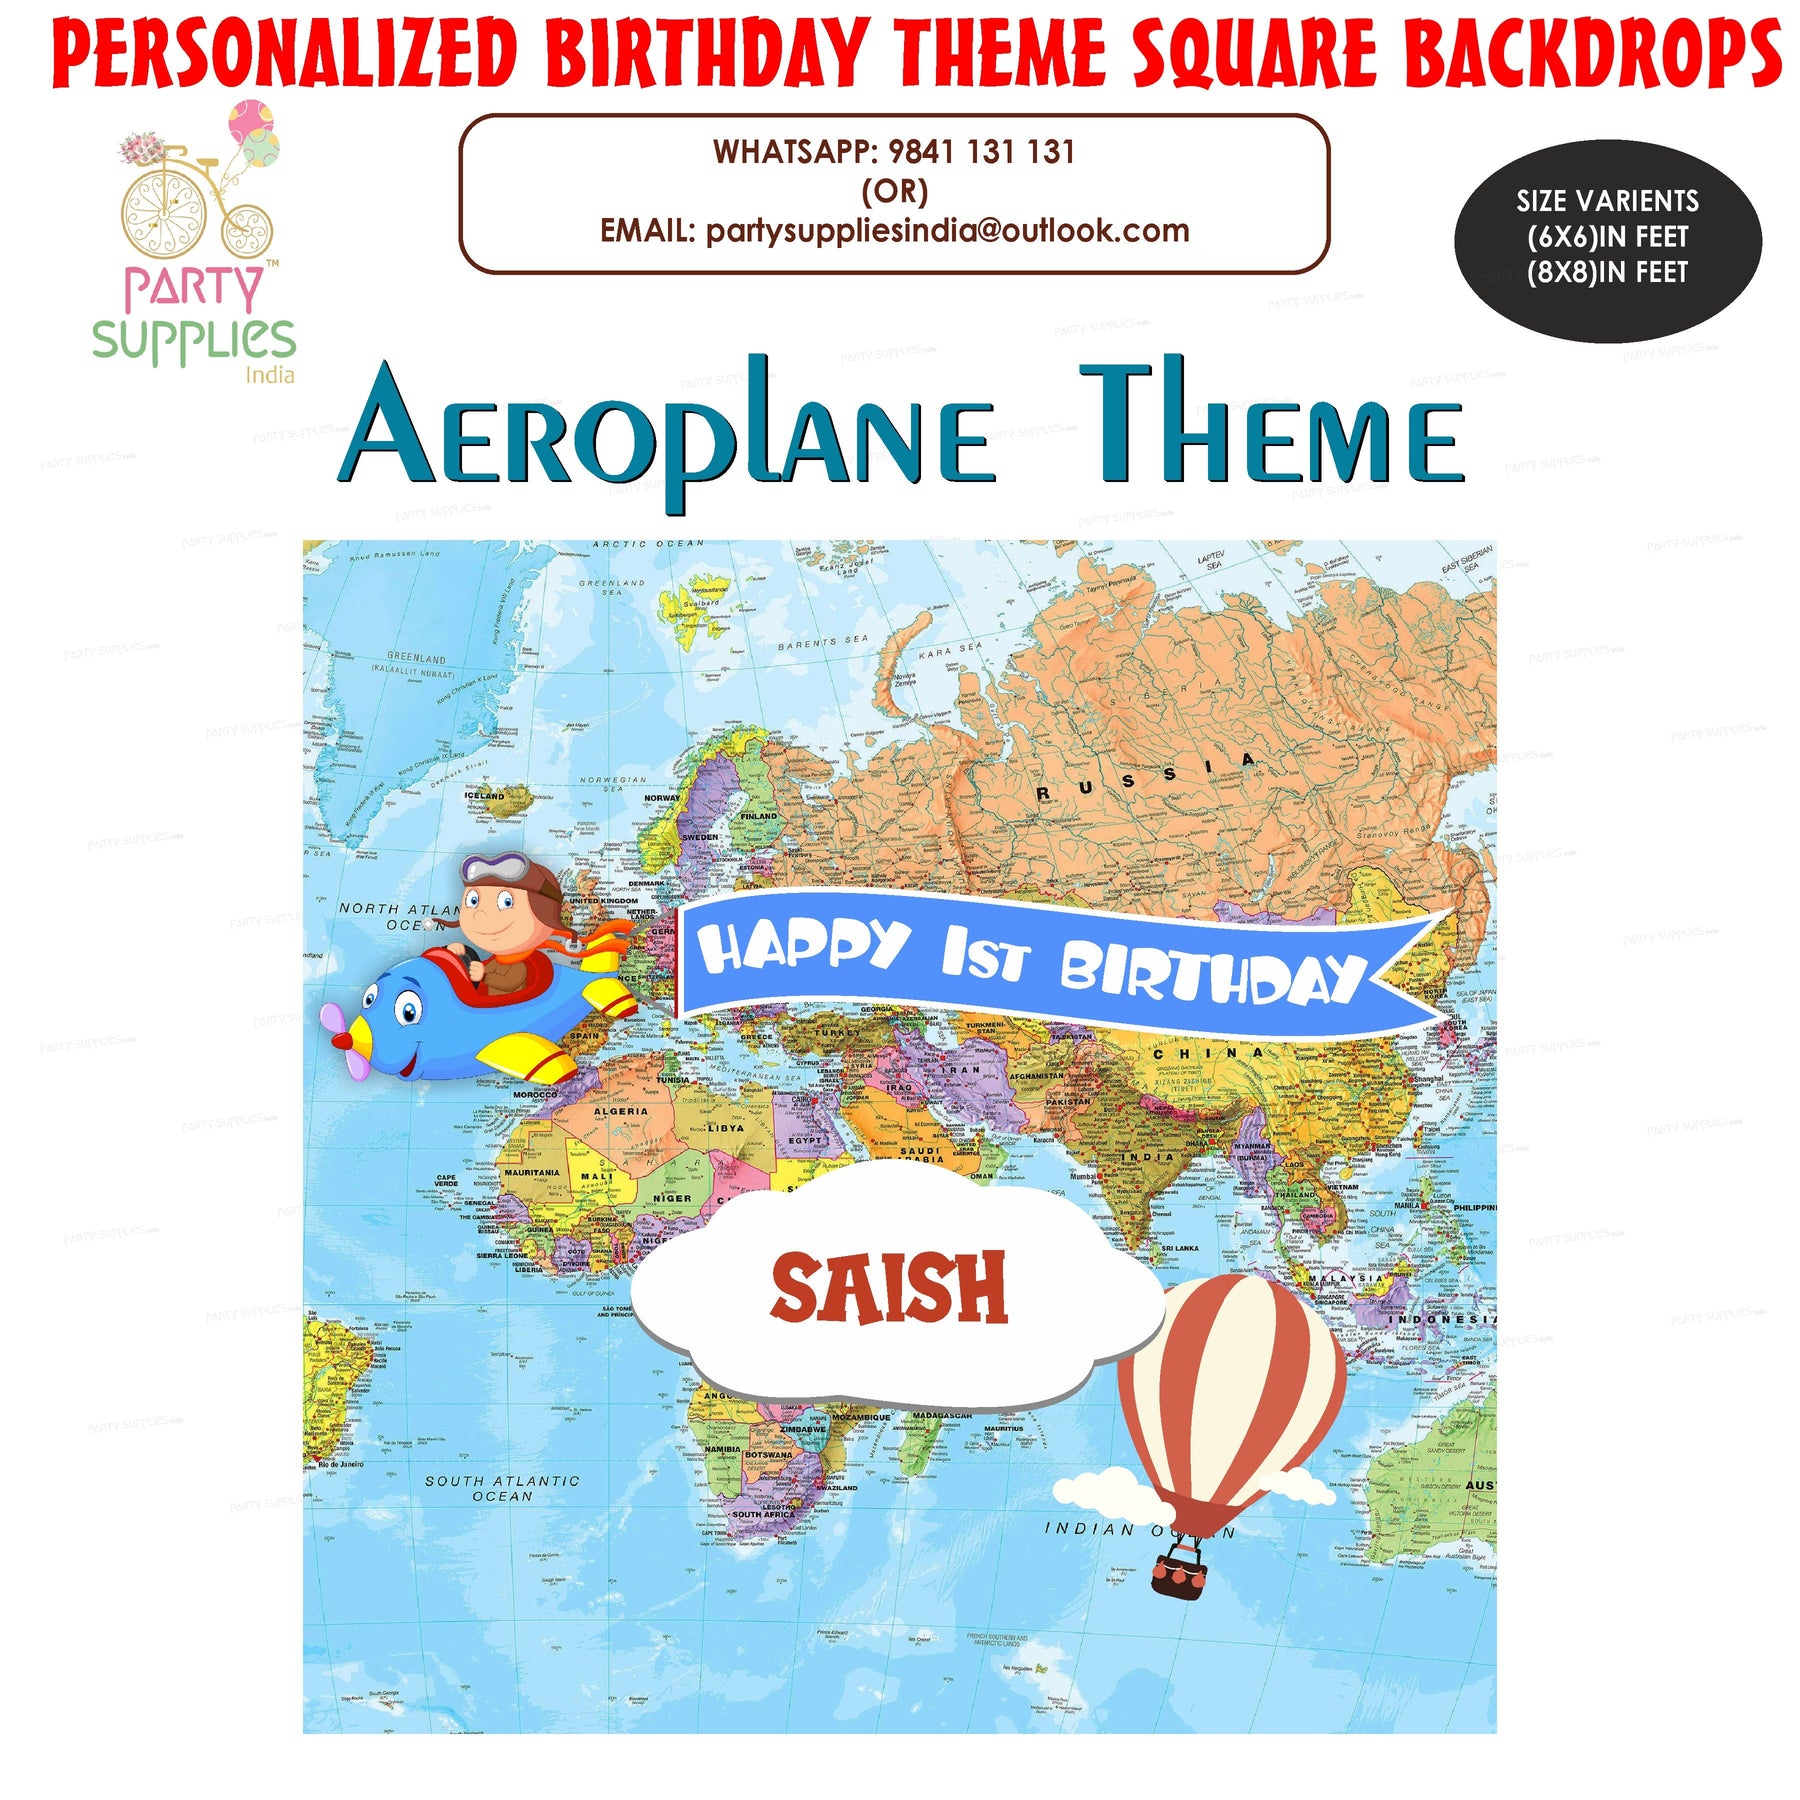 PSI Aeroplane Theme Personalized Backdrop